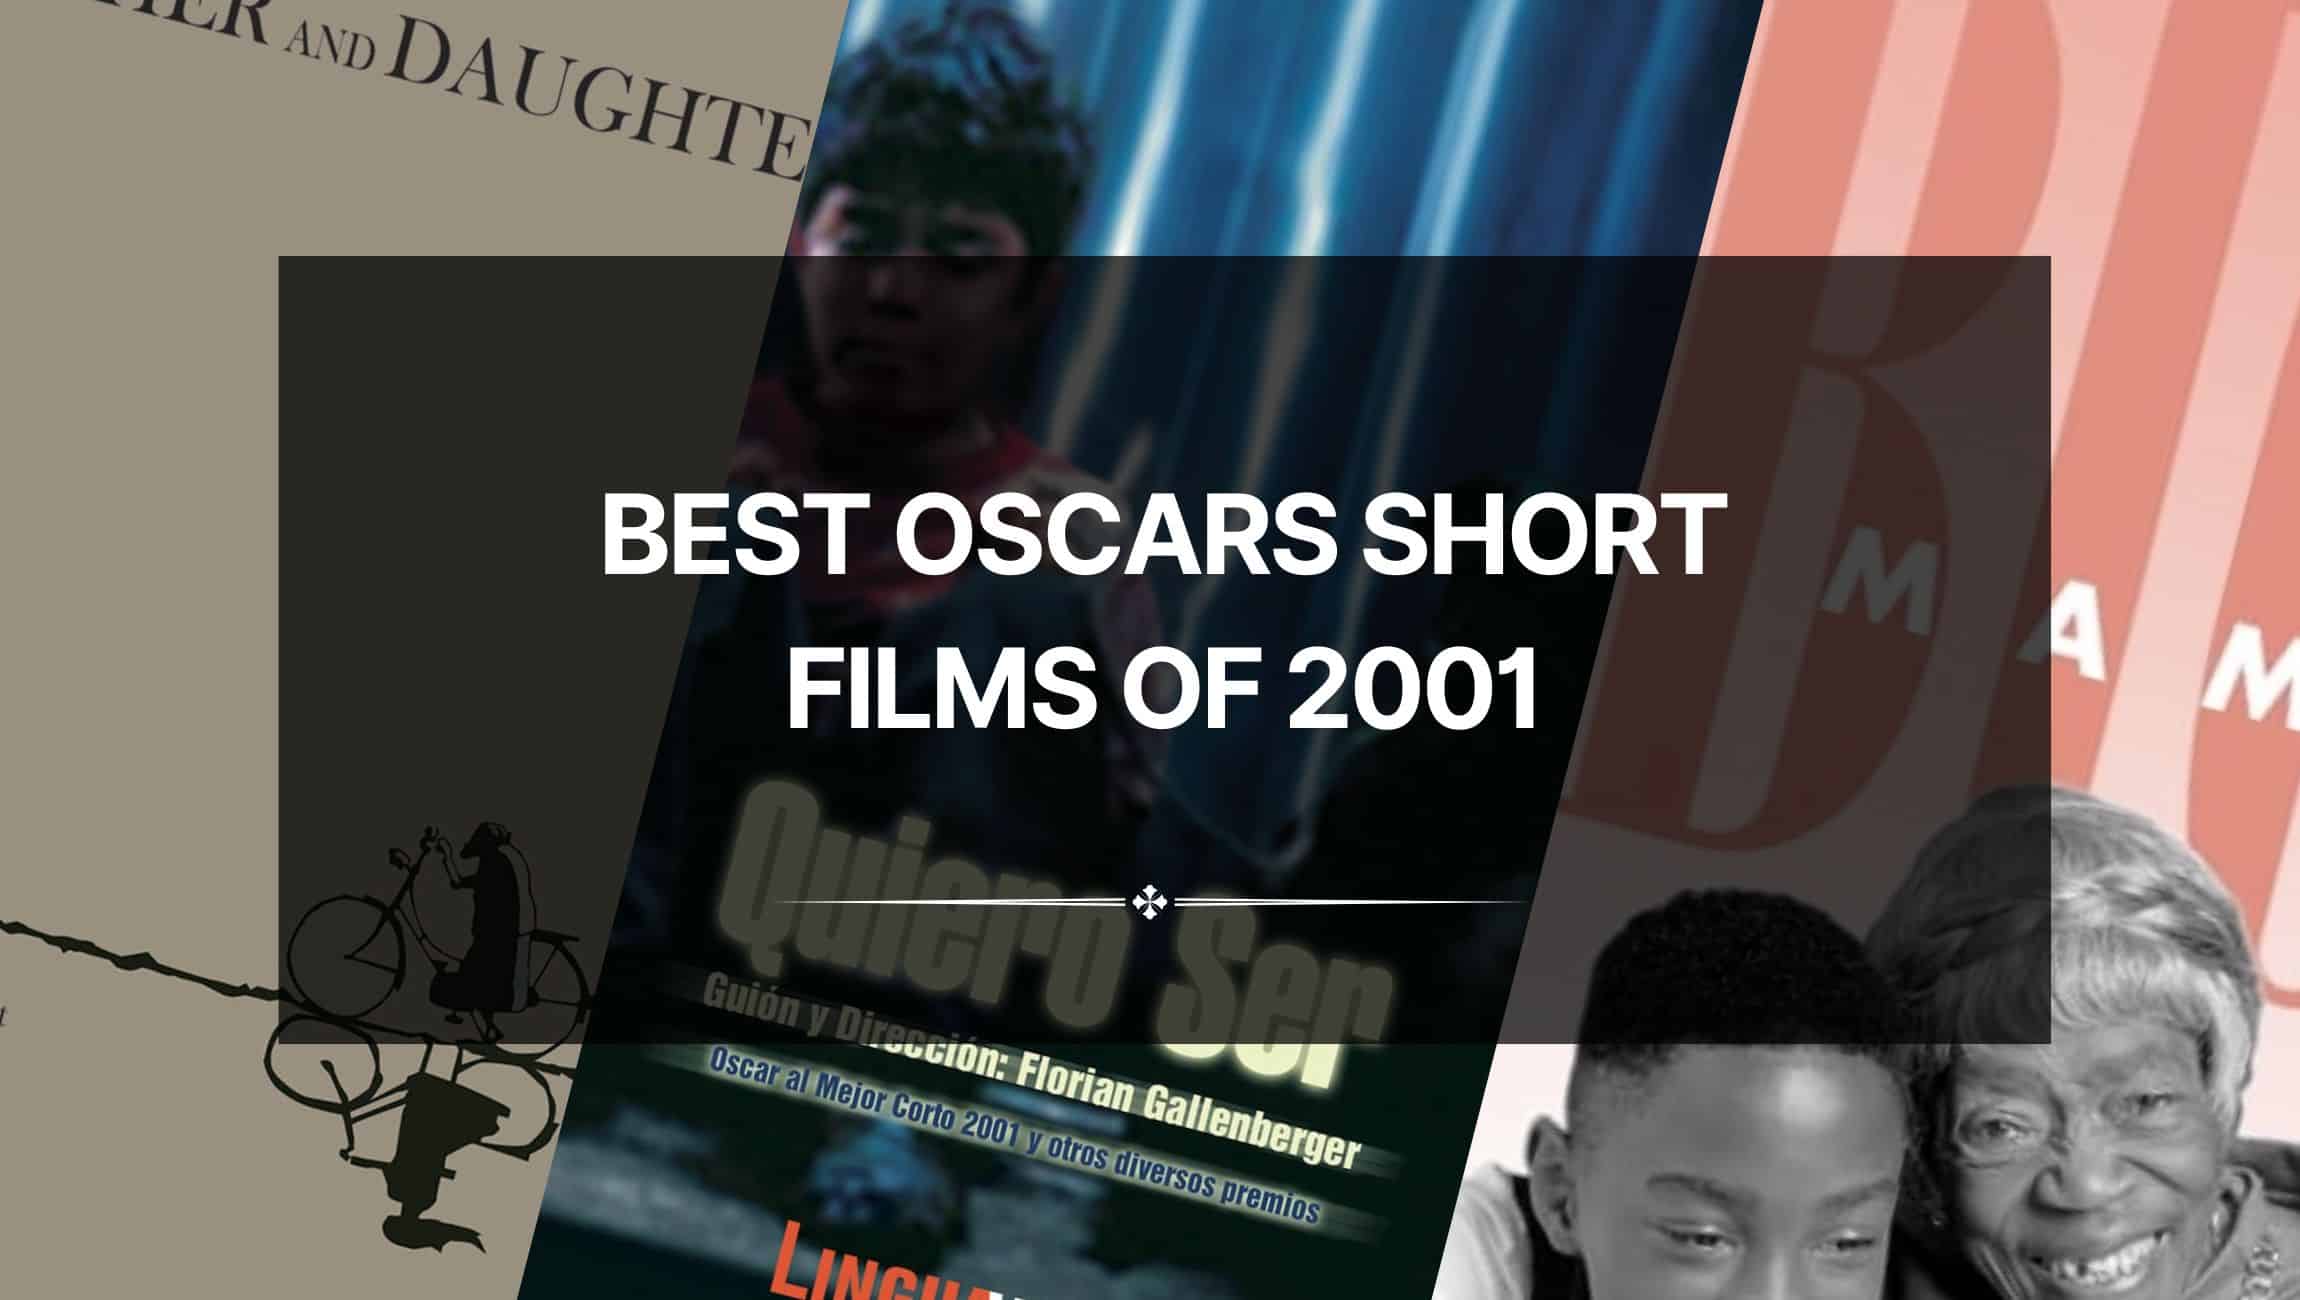 Best Oscars Short Films of 2001